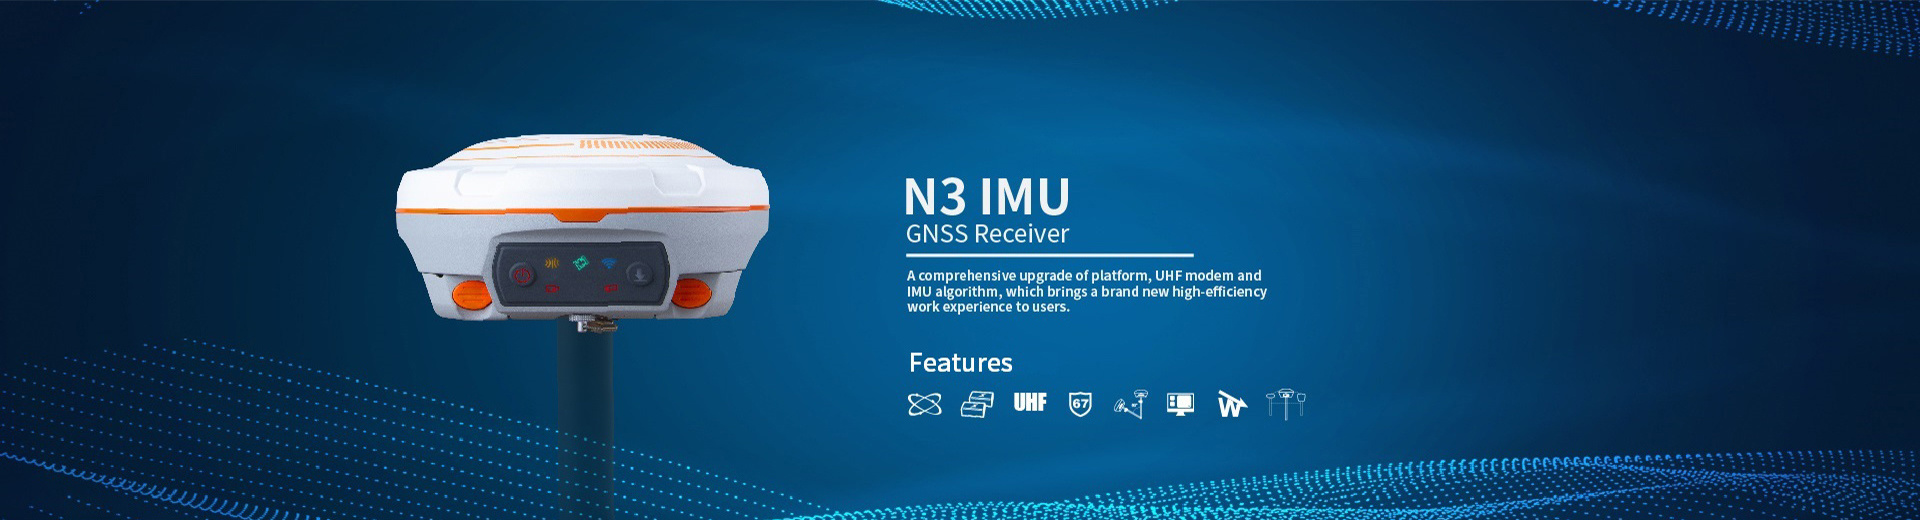 N3 IMU GNSS Receiver